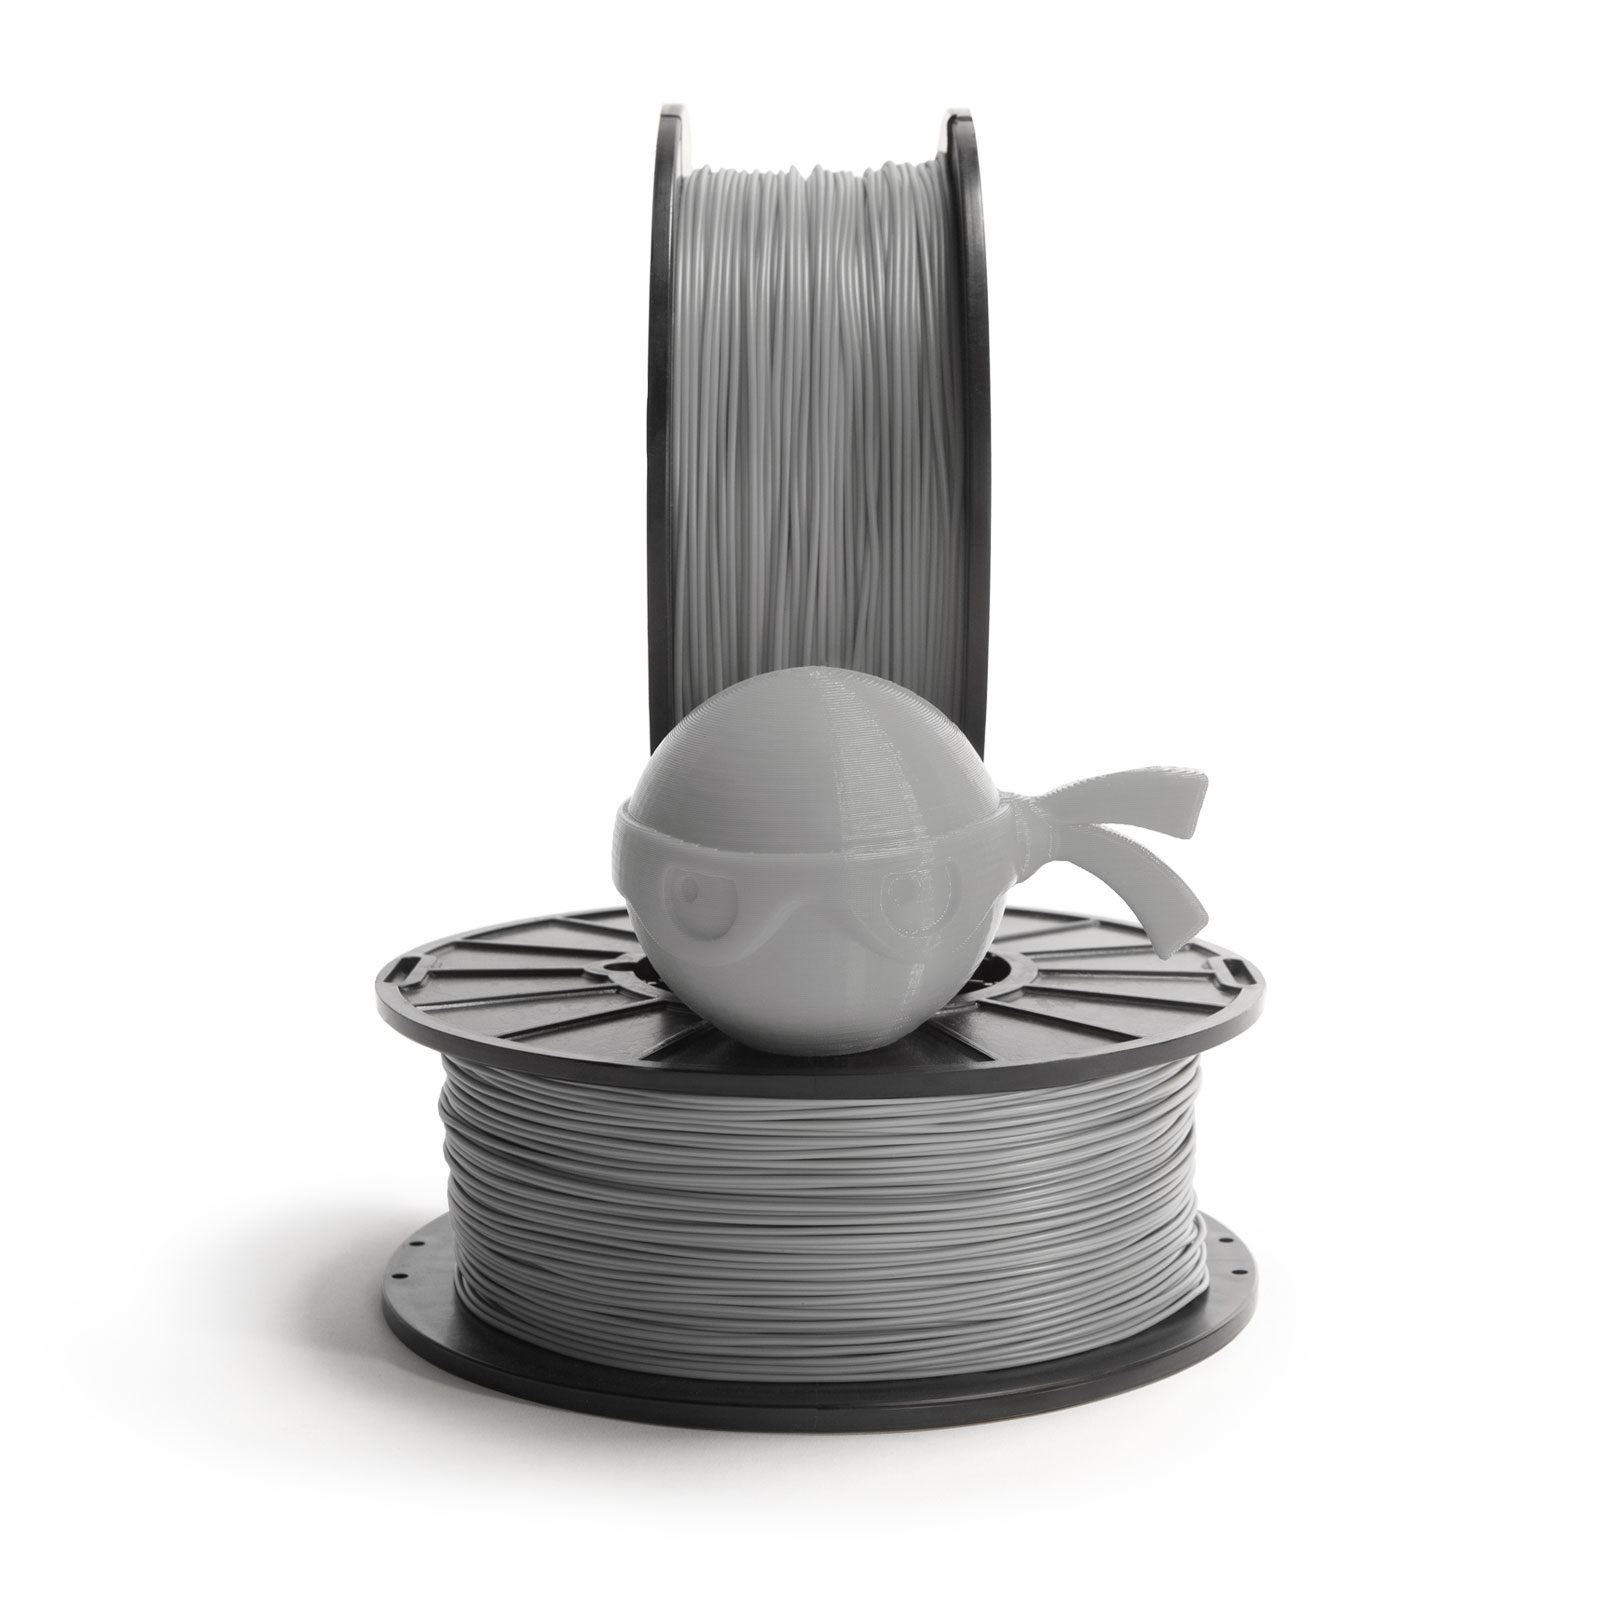 NinjaFlex 85A TPU Steel 1.75mm Flexible 3D Printer Filament 500gms